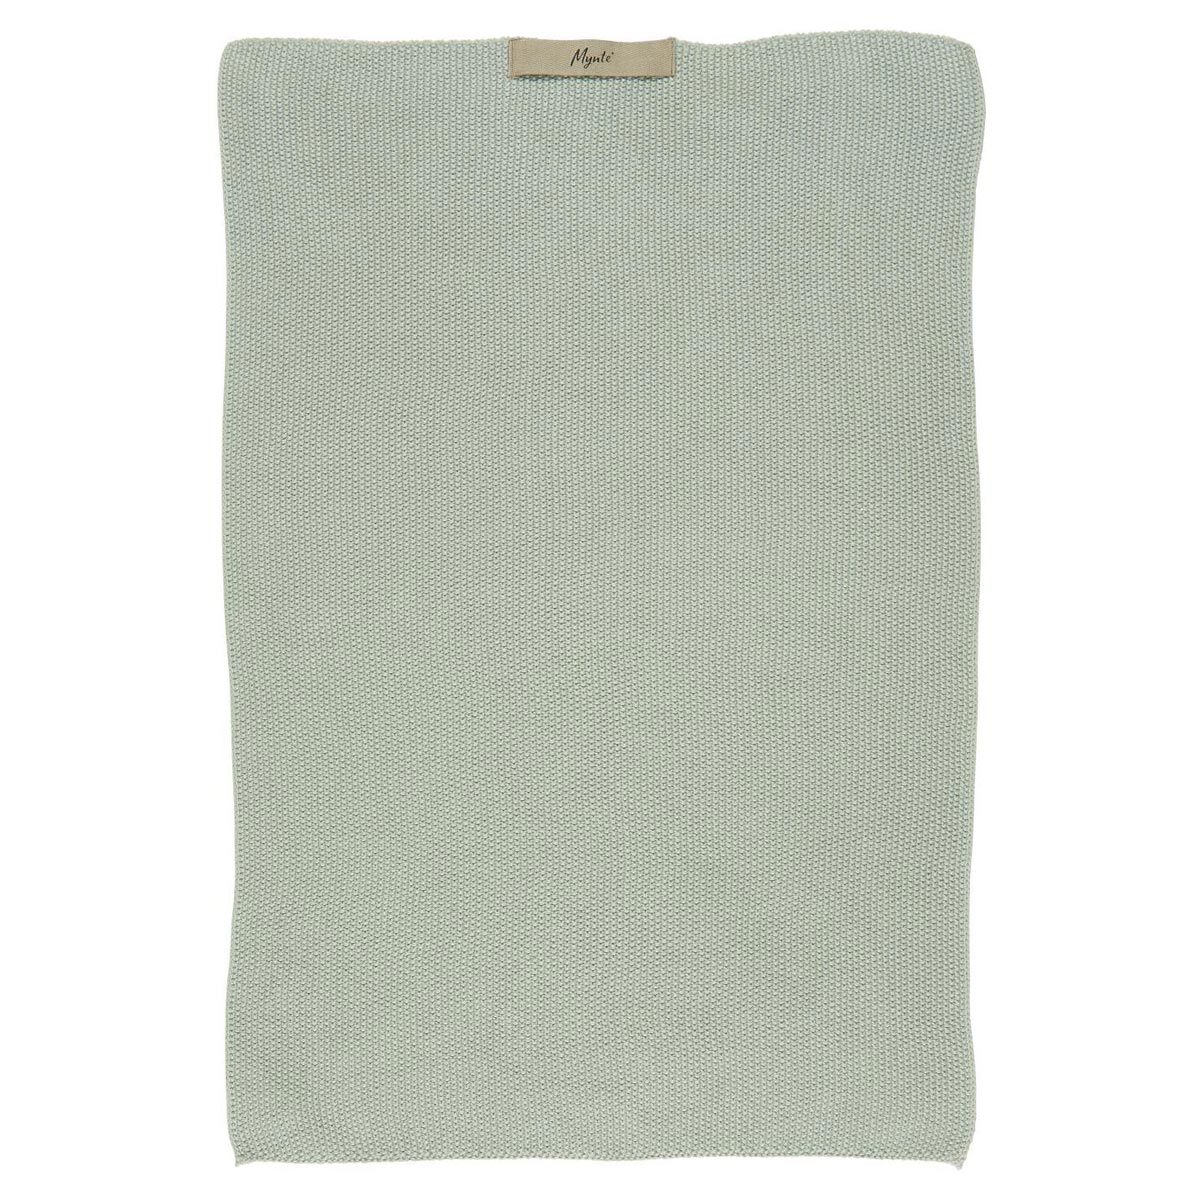 IB Laursen Towel Aqua Haze Knitted 100% cotton 6352-83